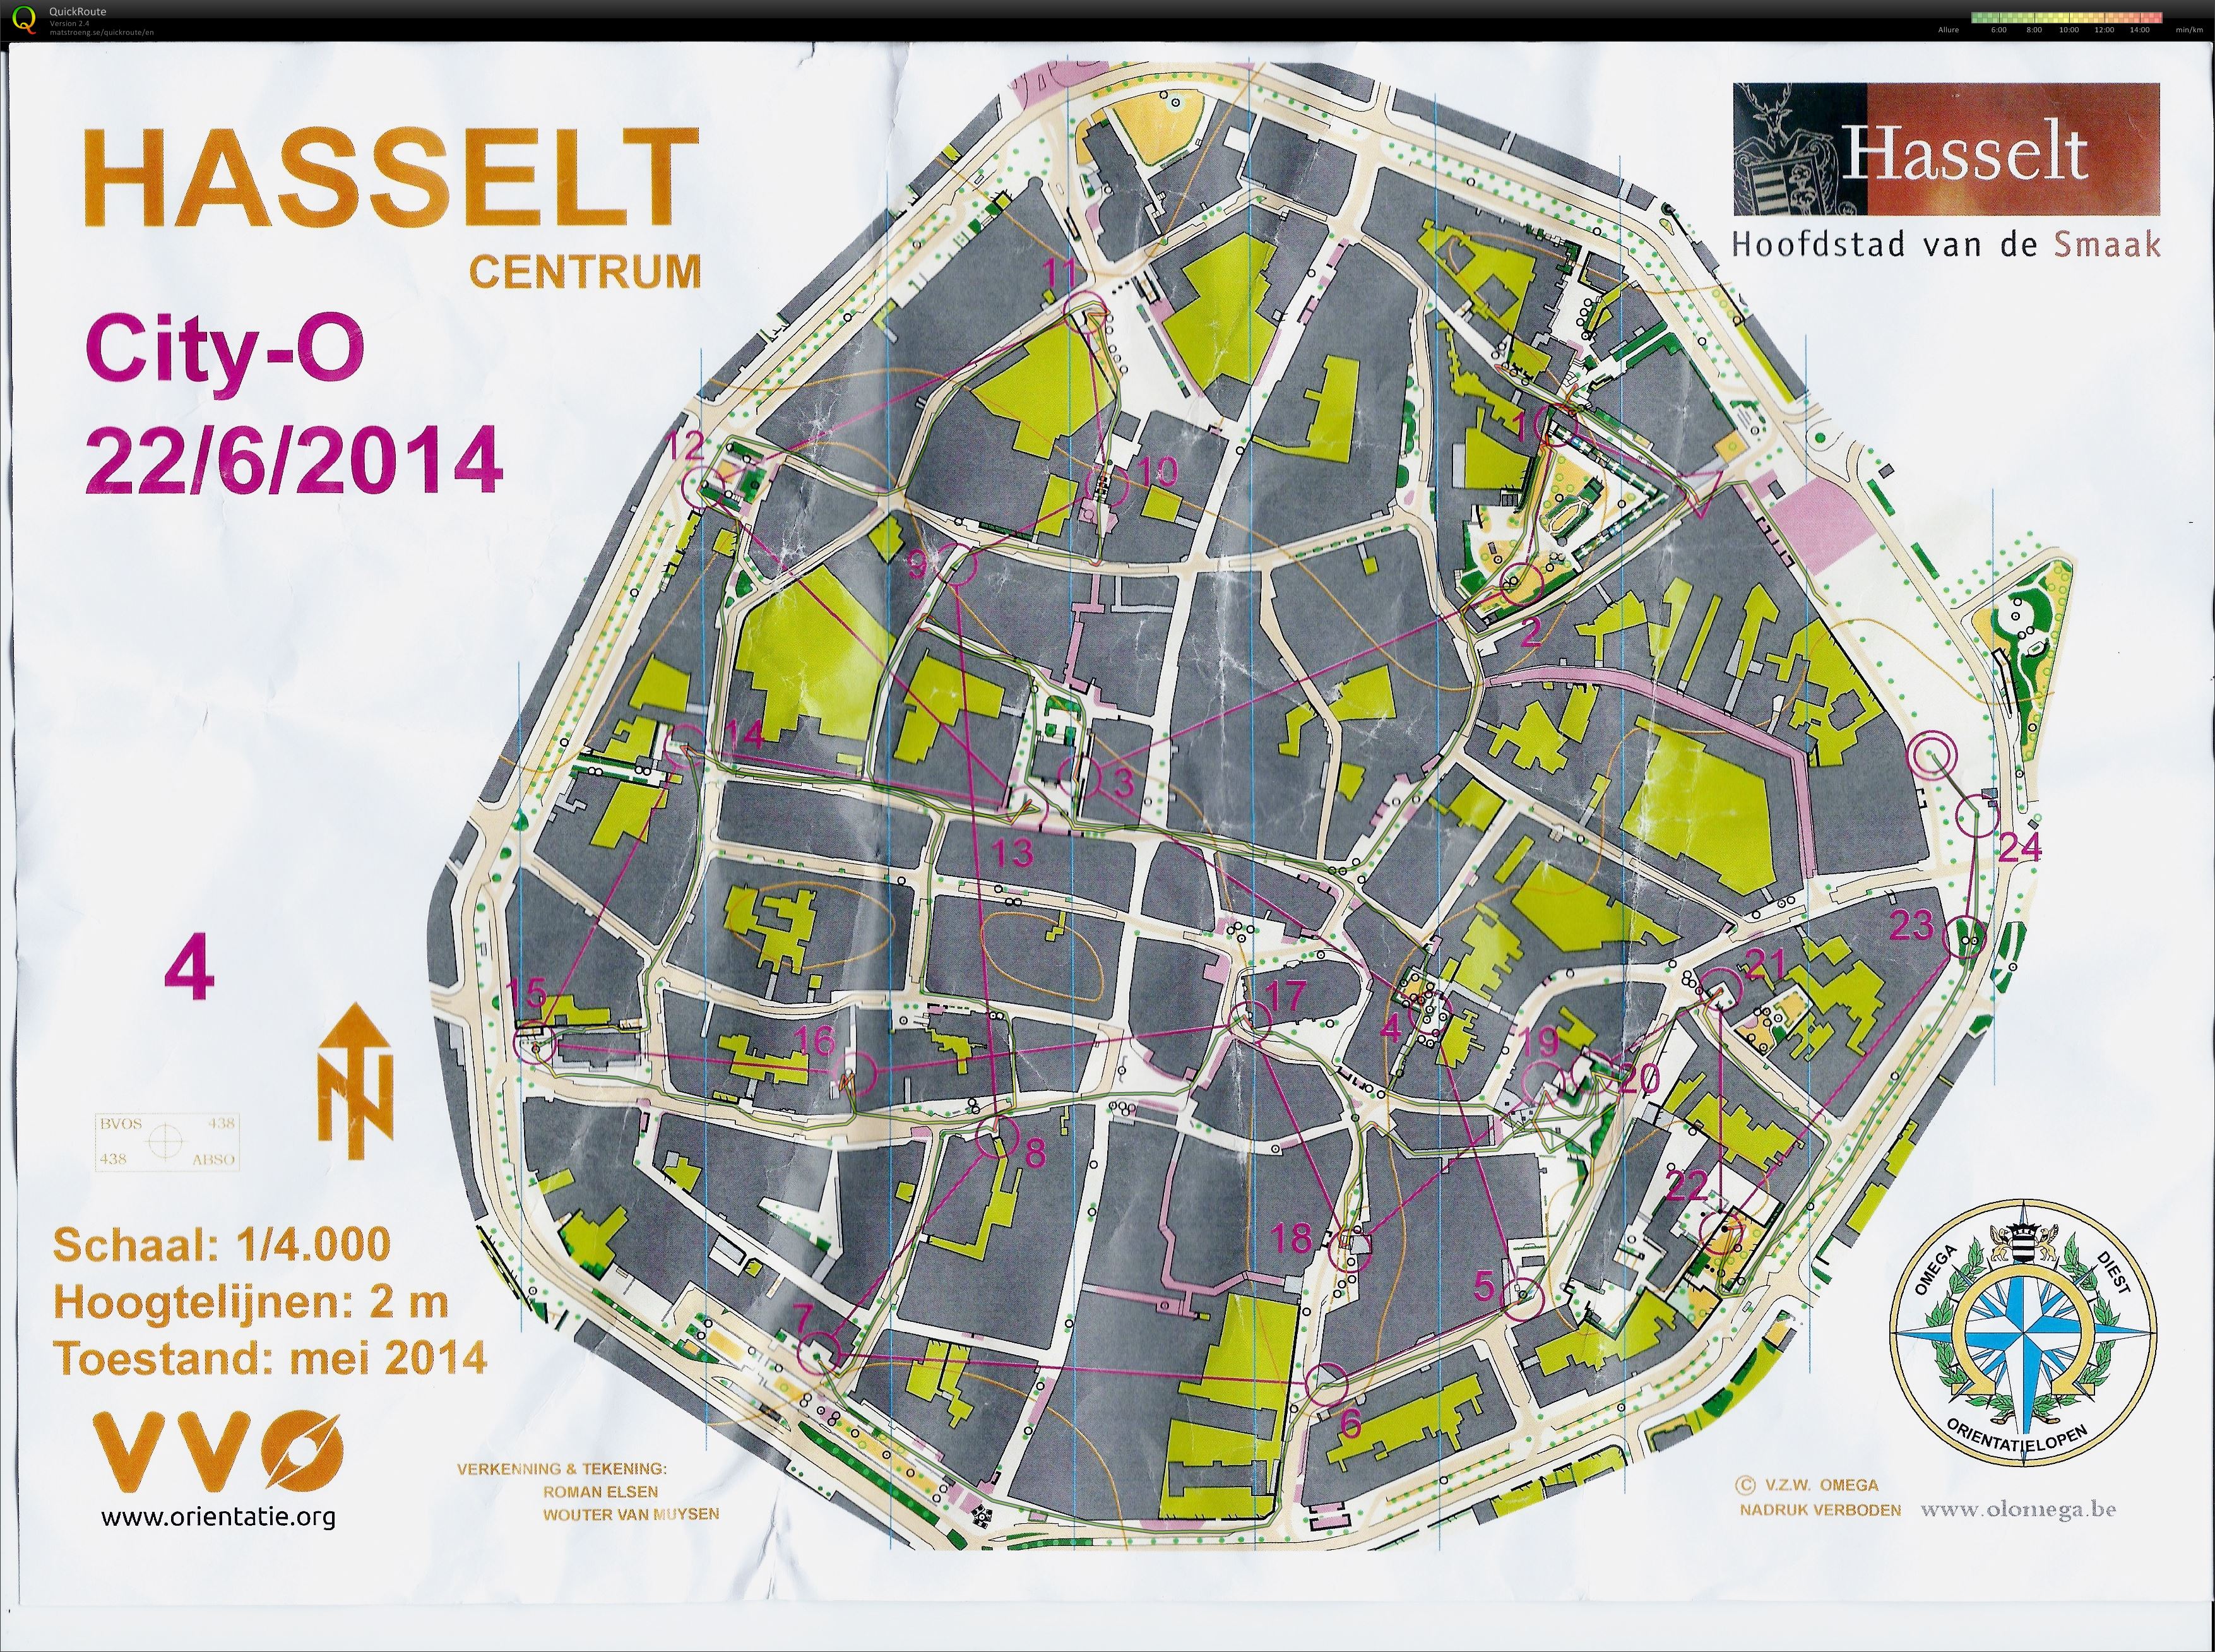 Hasselt centrum (22.06.2014)